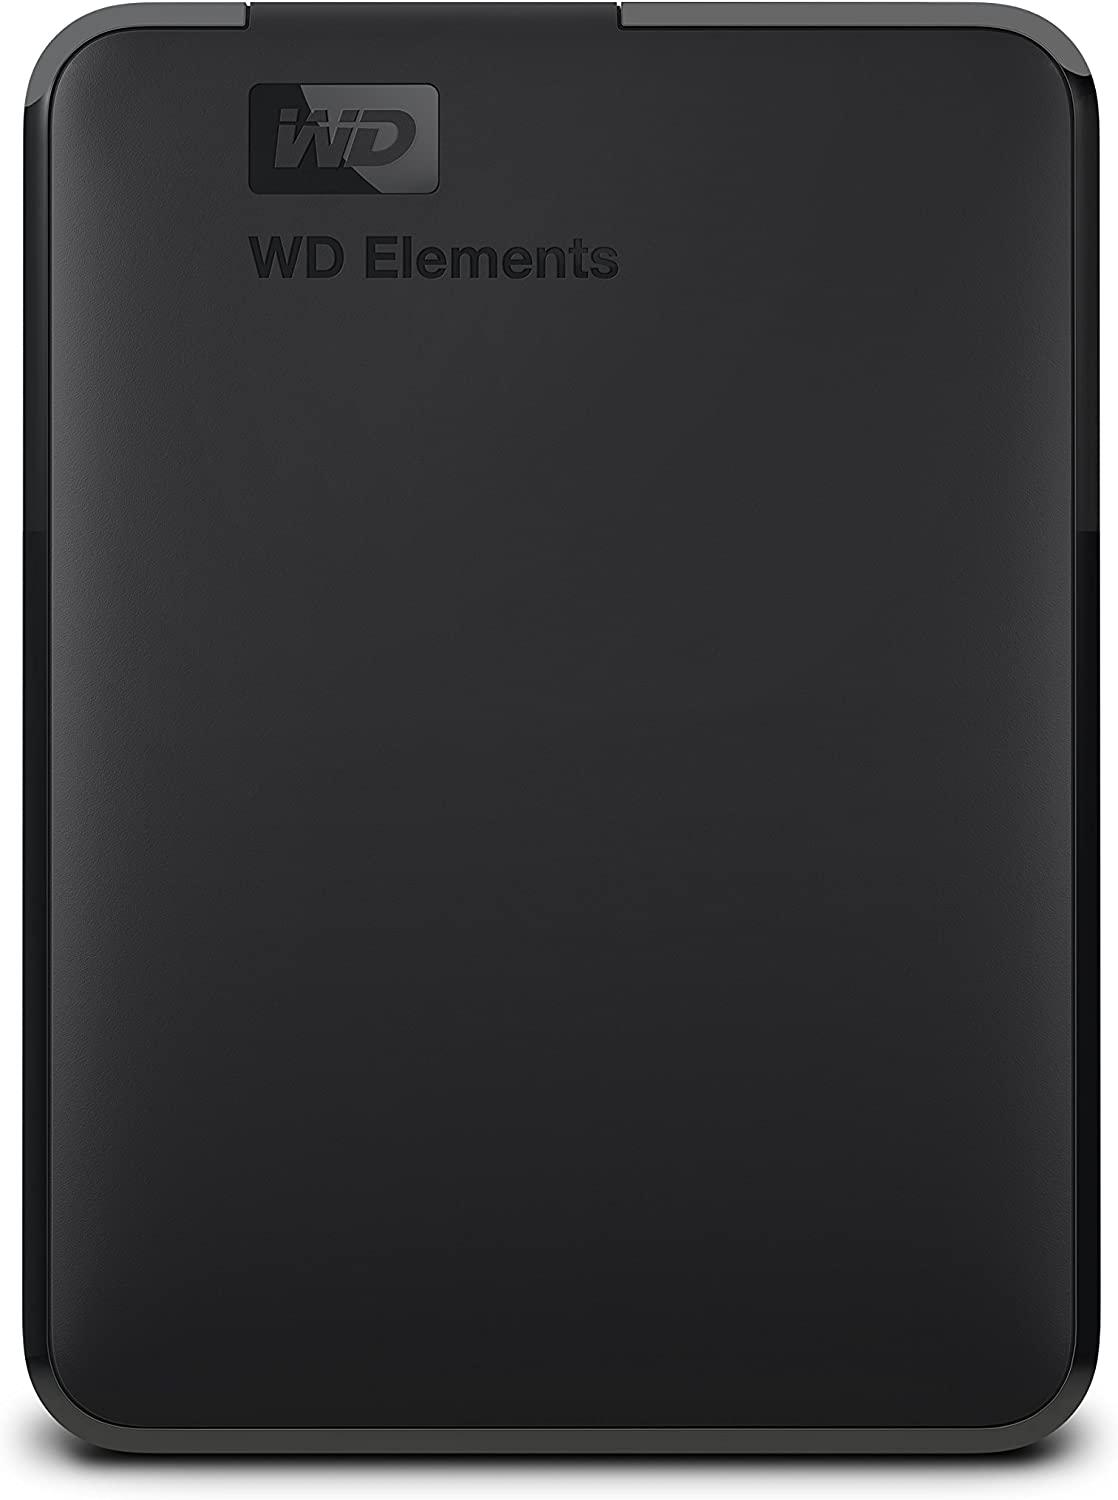 WD Elements discos duros